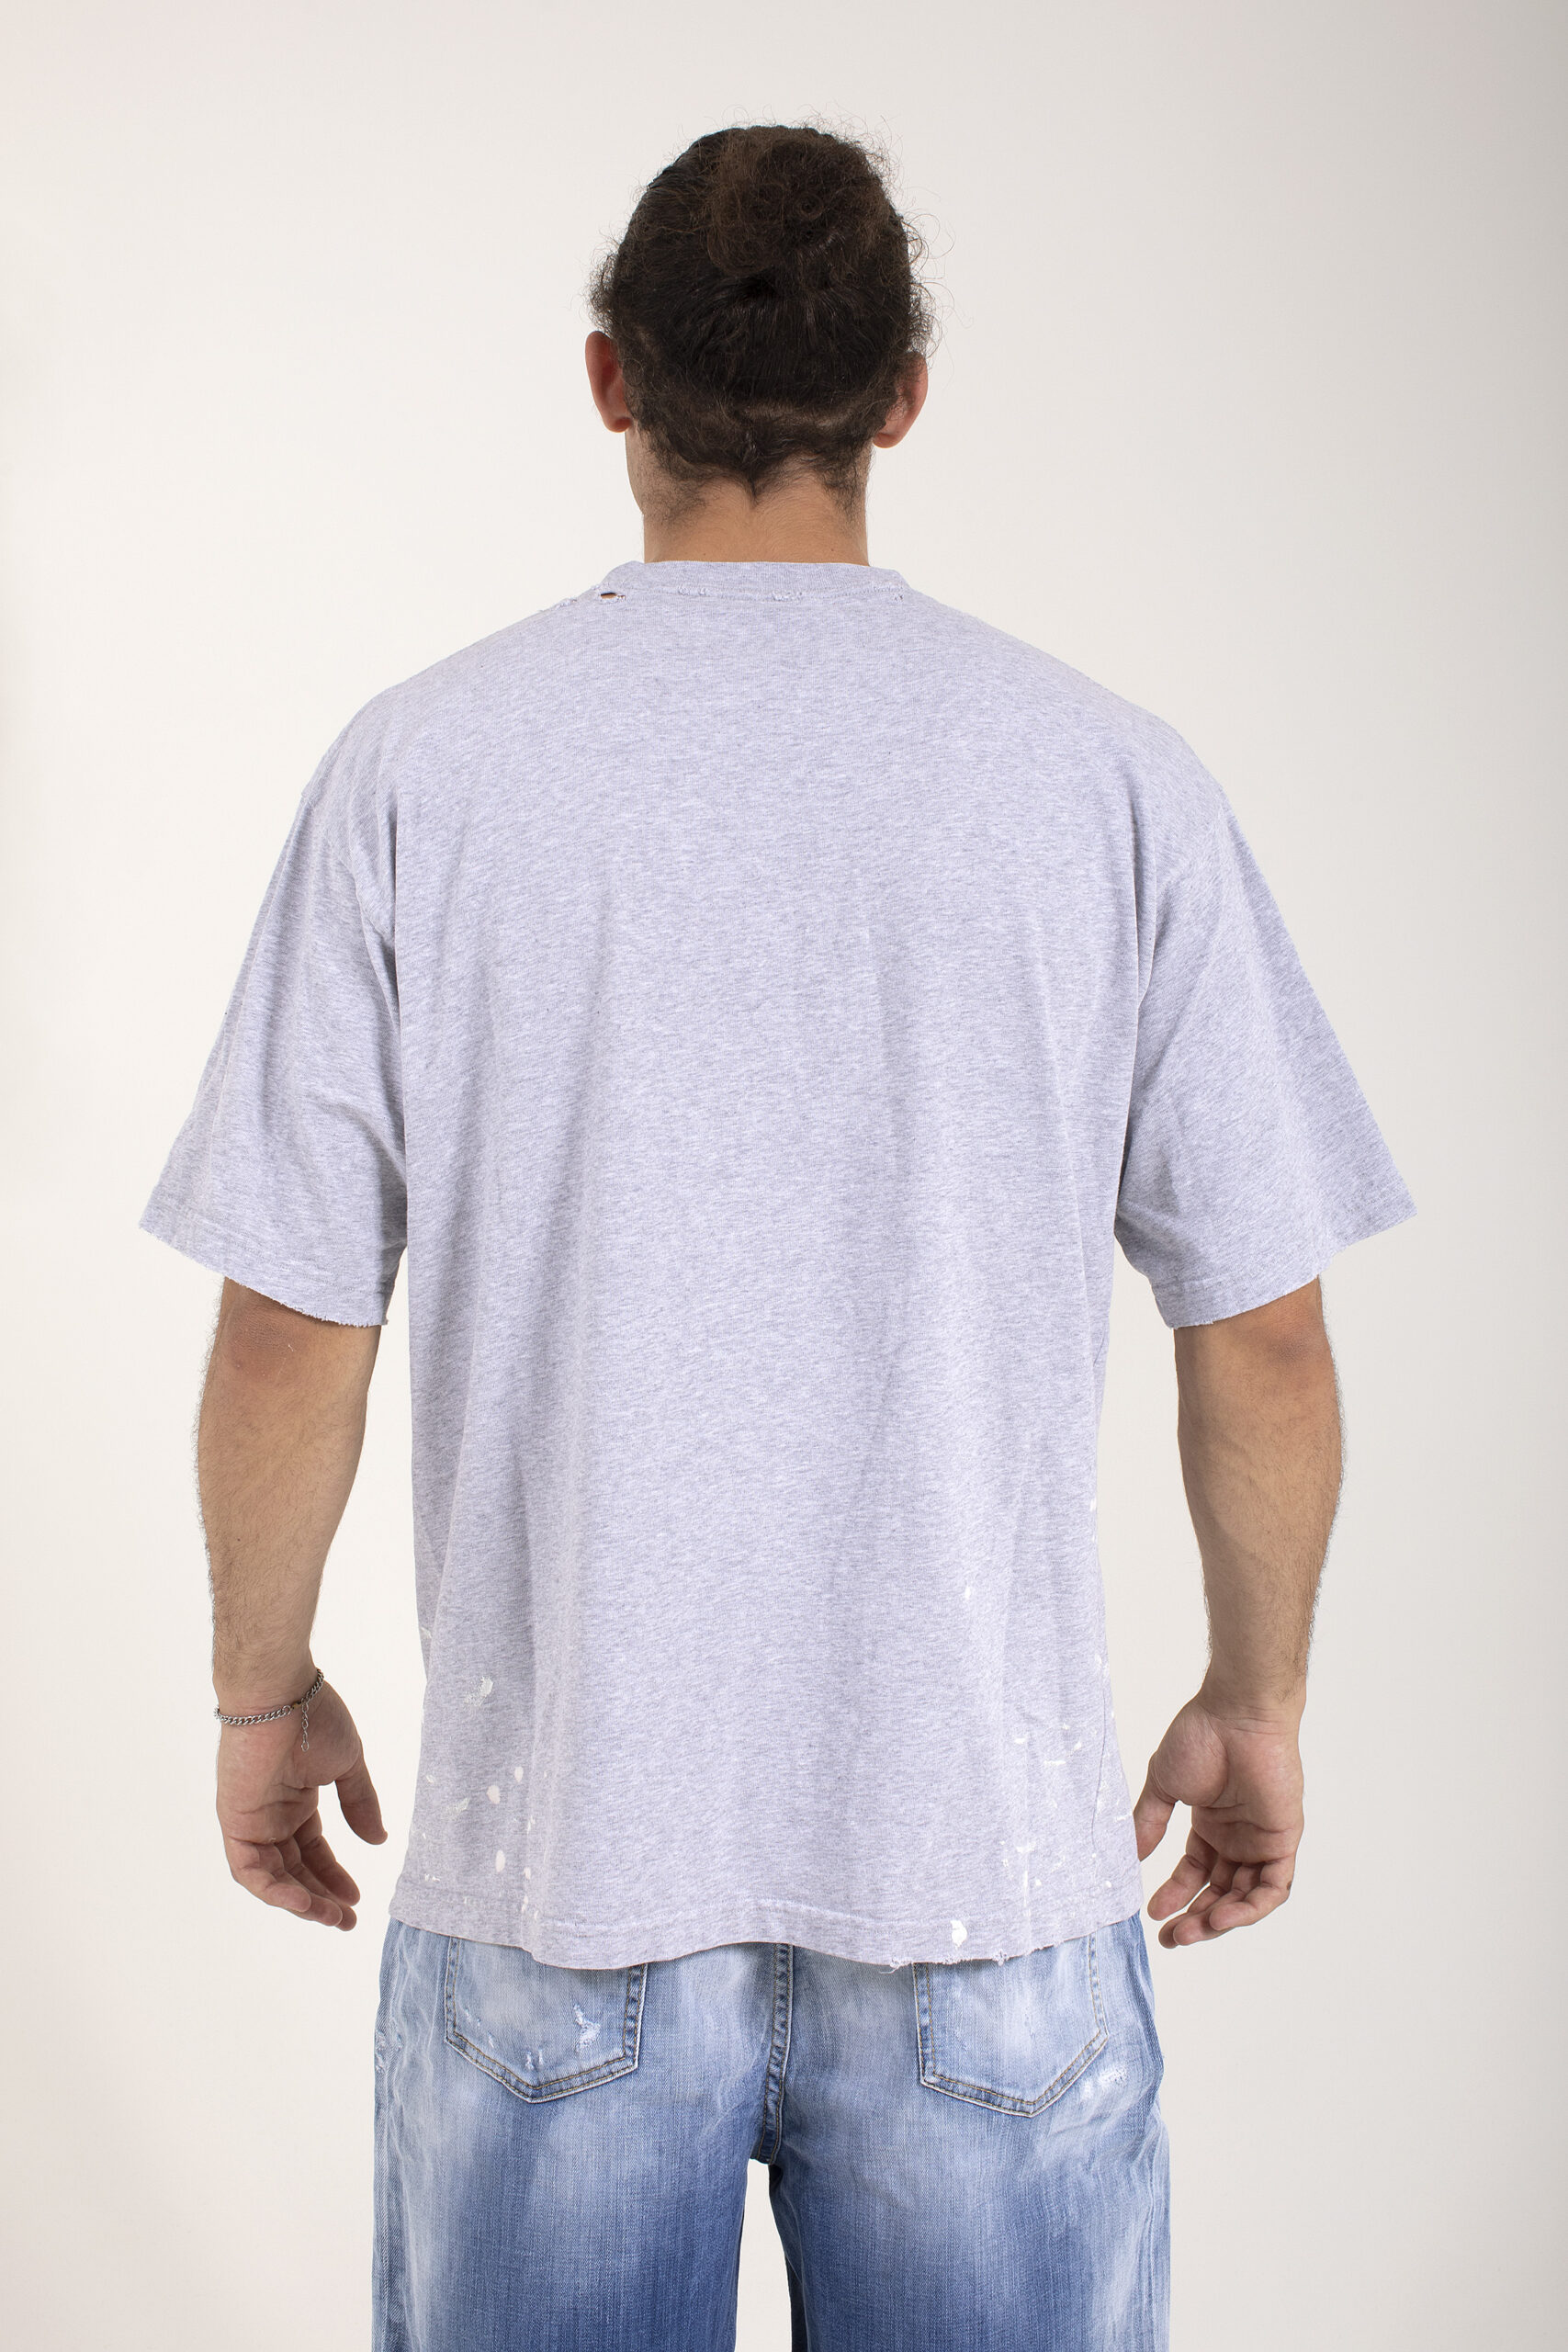 Balenciaga T Shirt 90/10 Large Fit vista retro